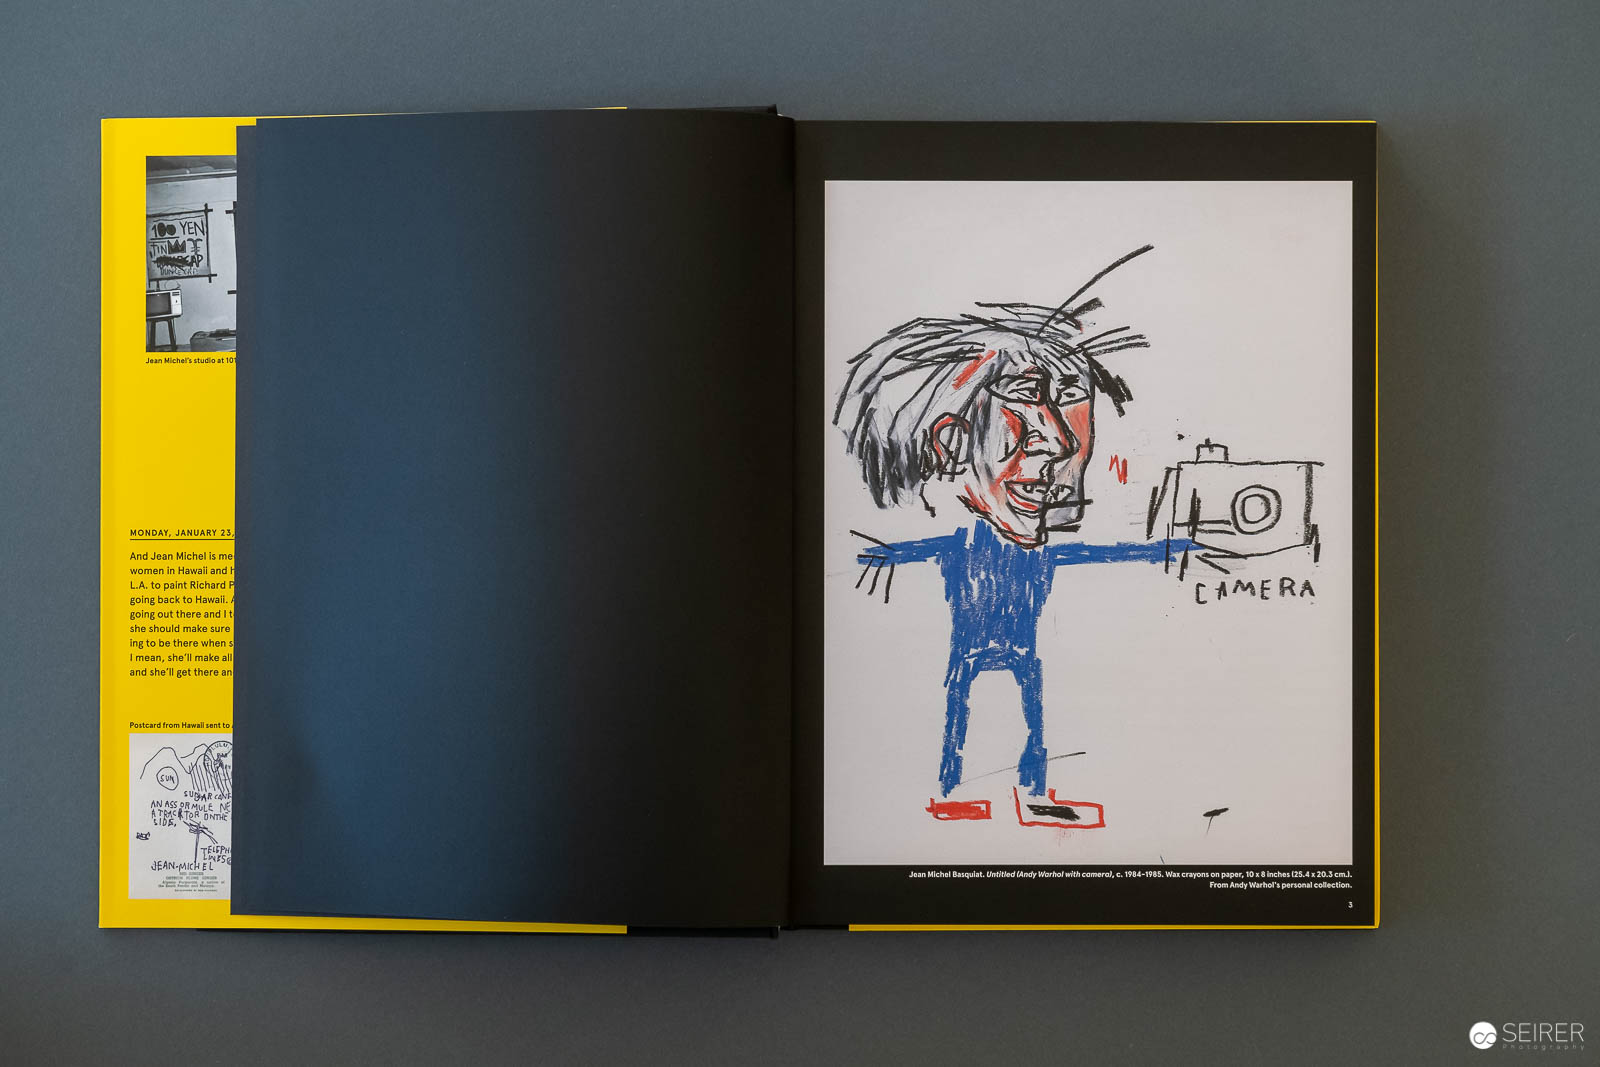 20191001 151630 Warhol On Basquiat 6680